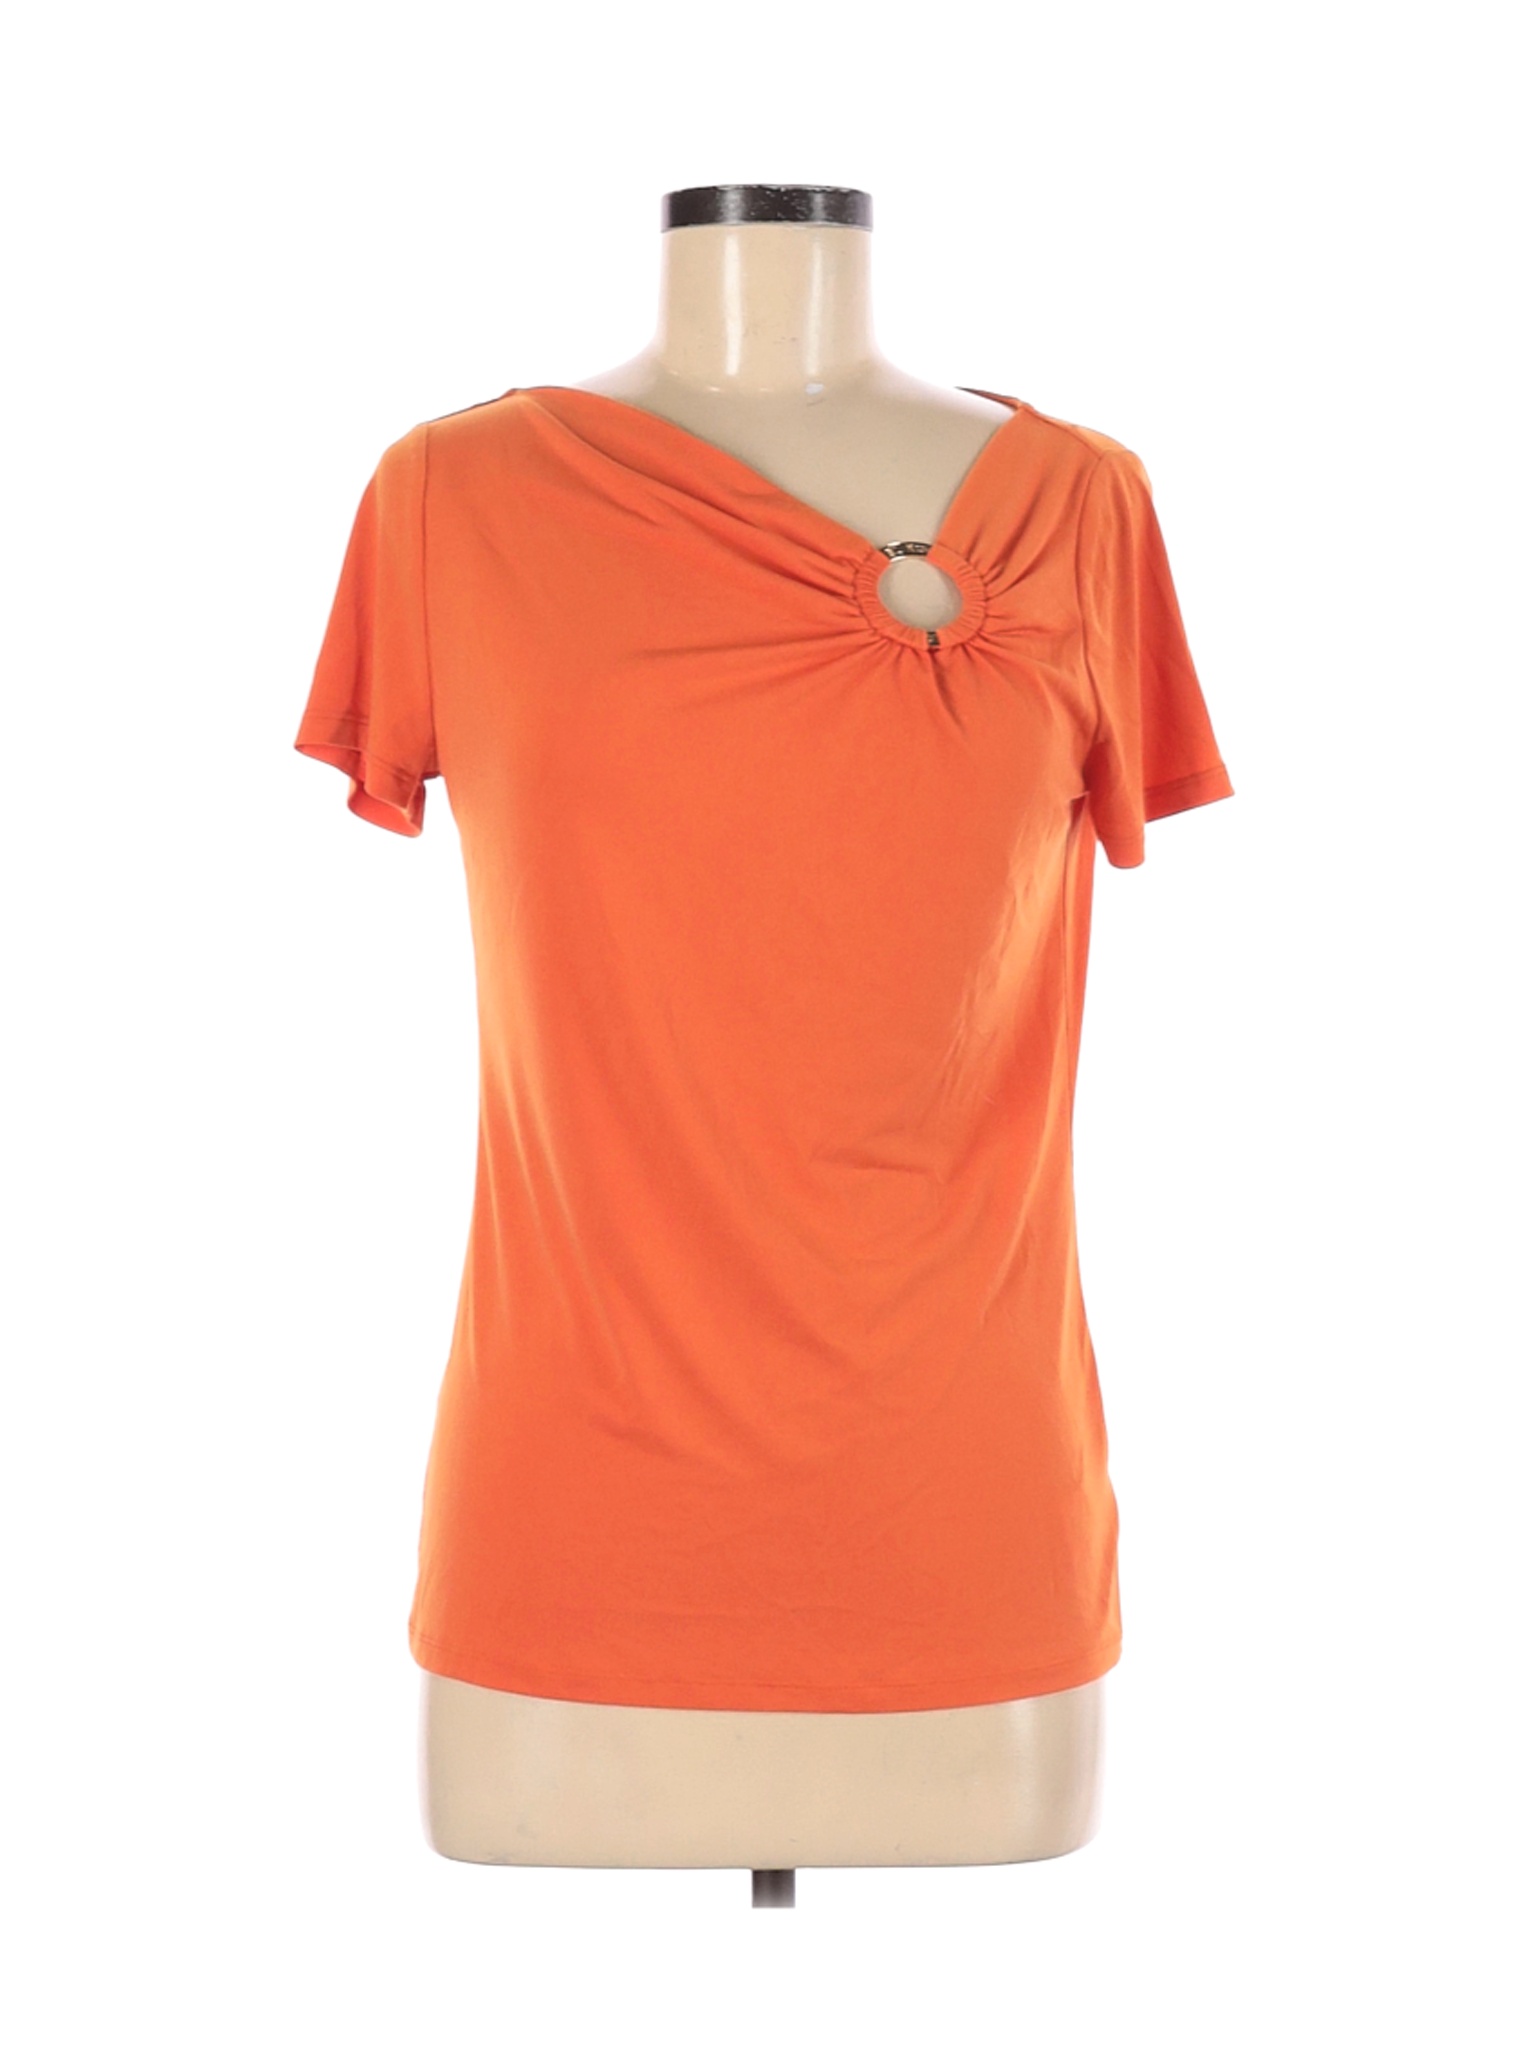 MICHAEL Michael Kors Women Orange Short Sleeve Top M | eBay